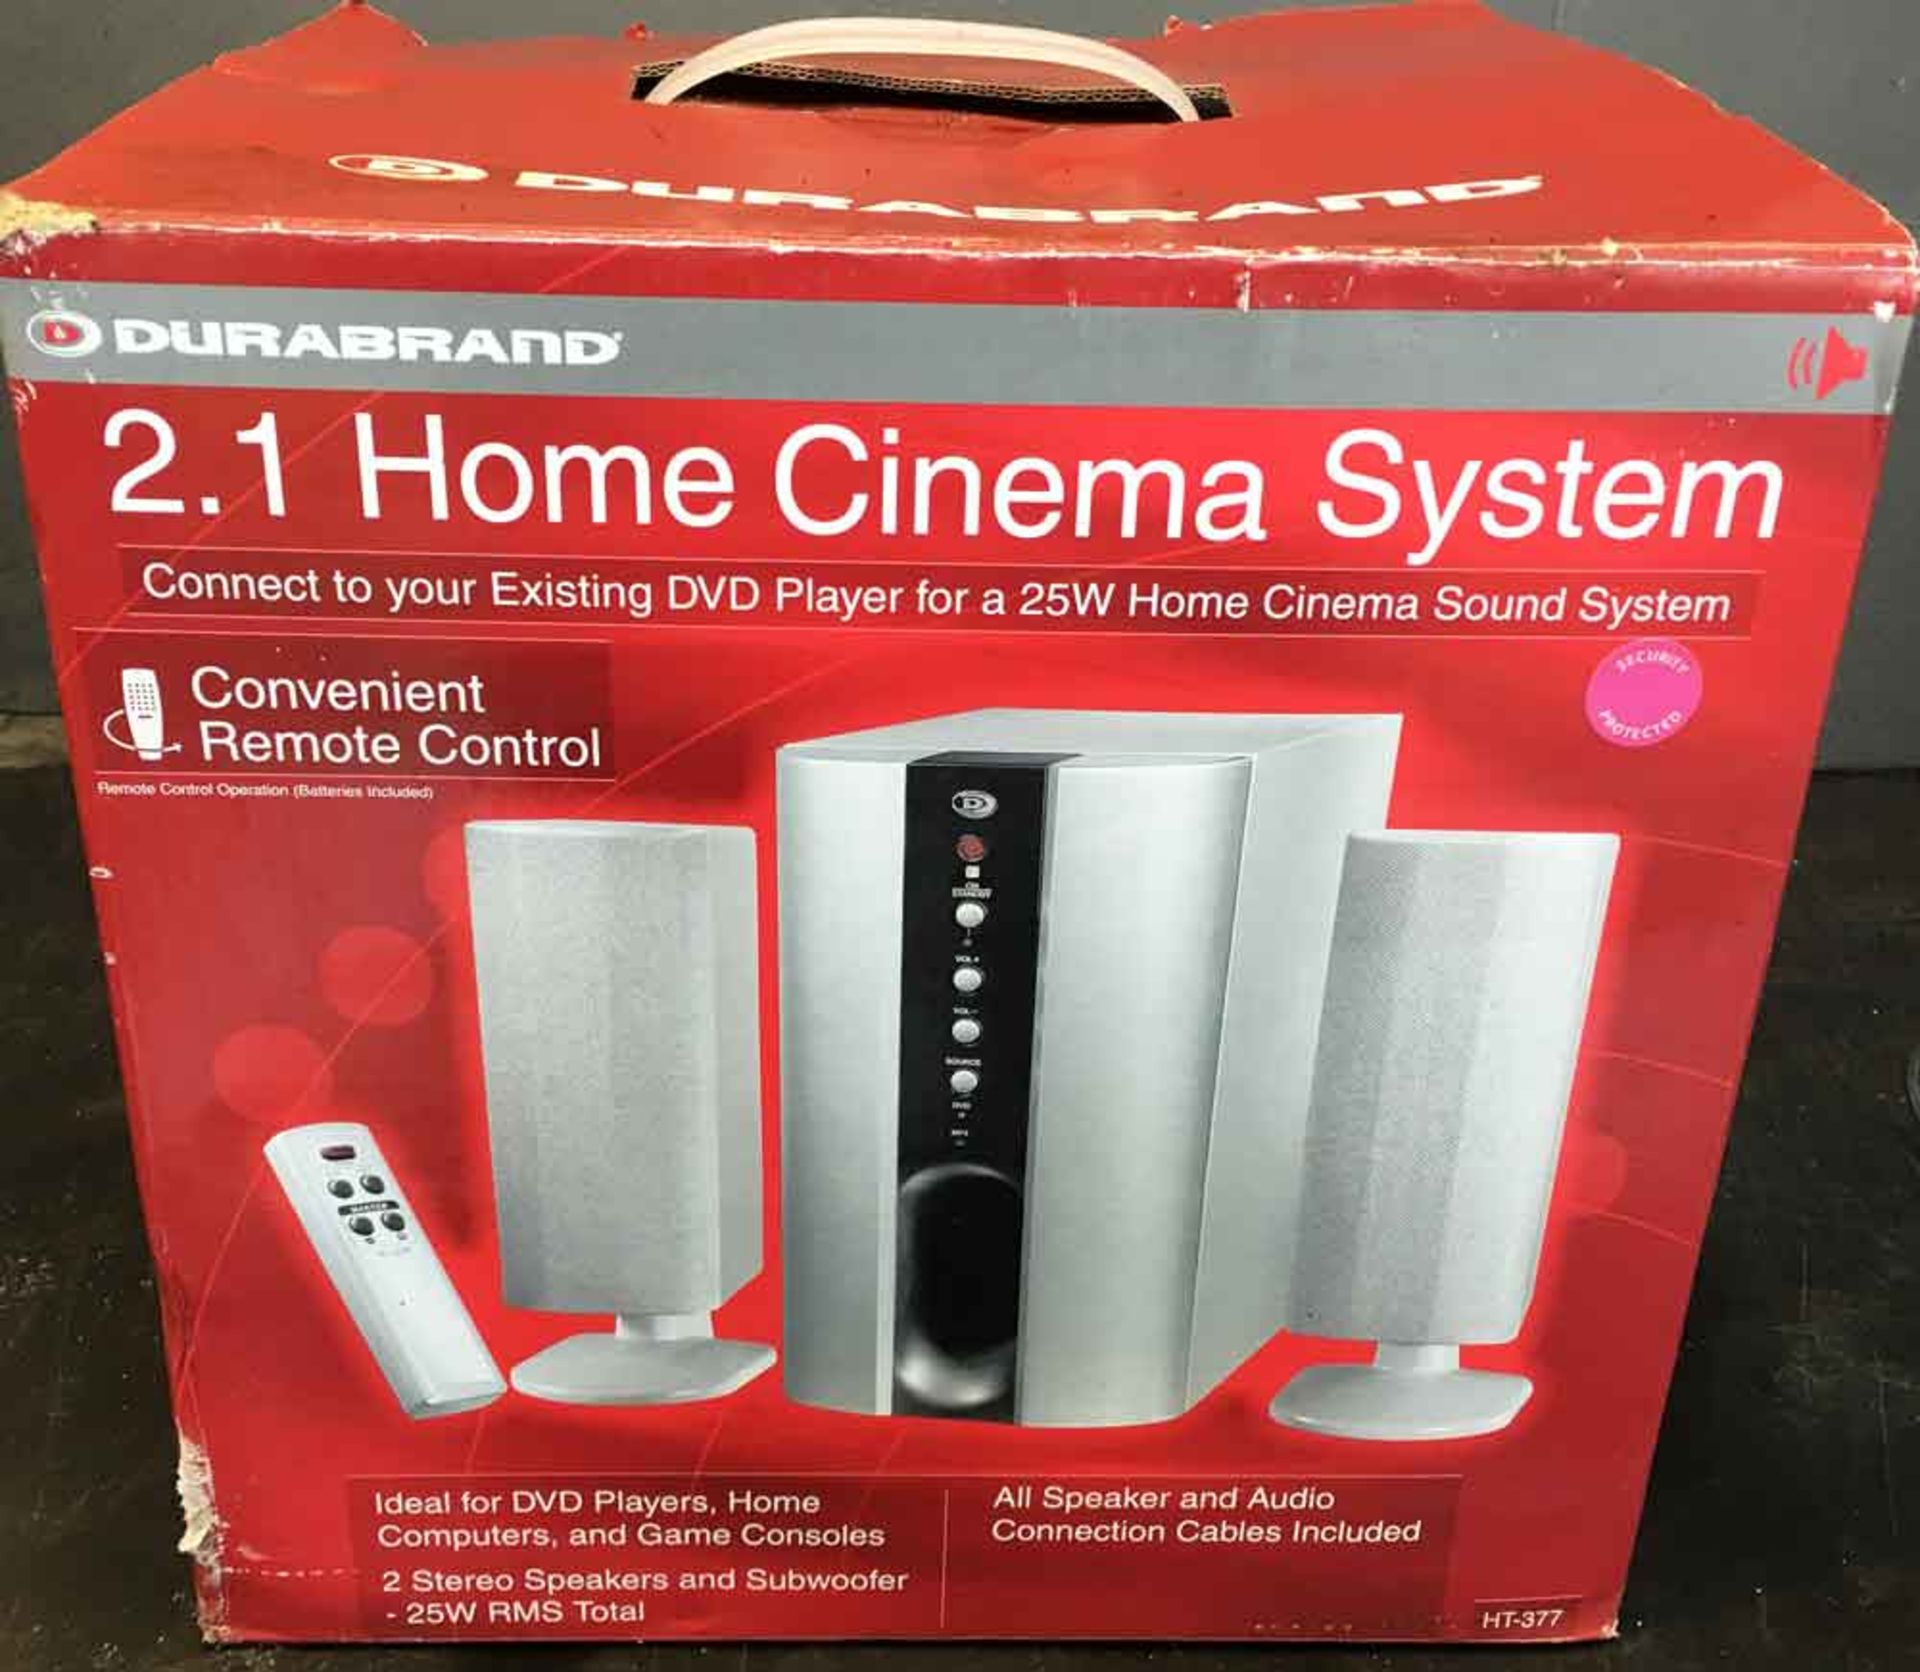 2.1 Home Cinema System